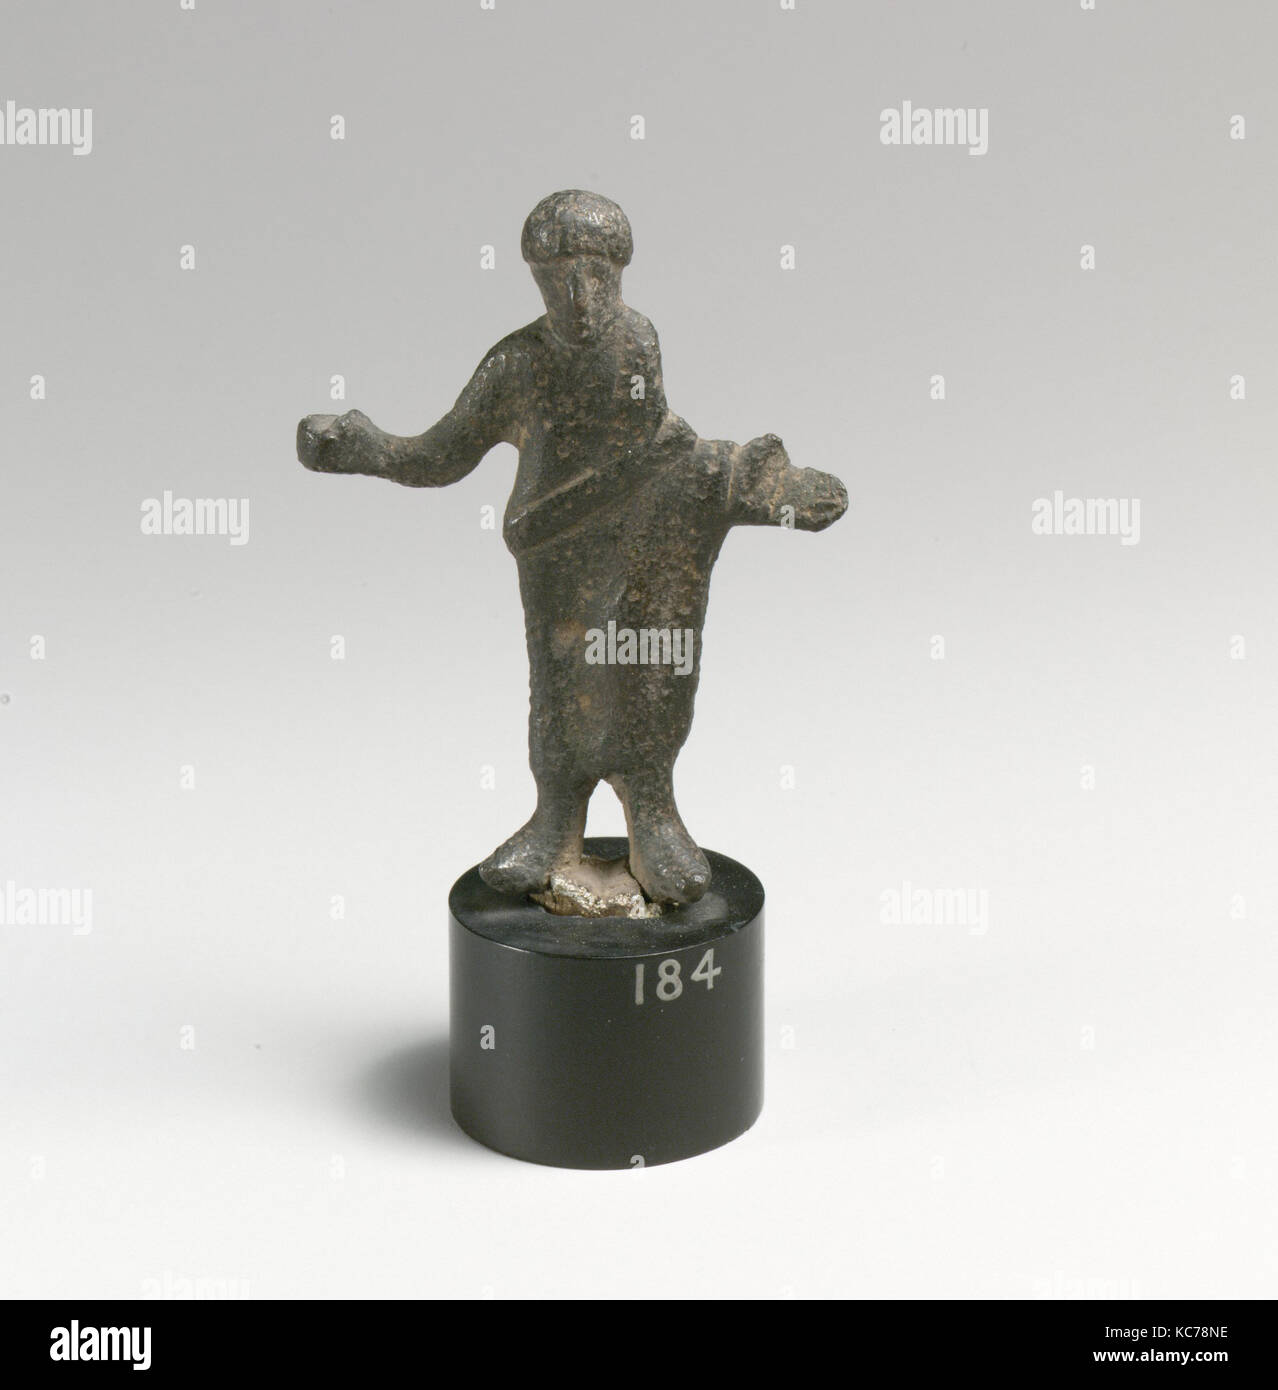 Statuette of a man, Bronze, H.: 2 7/8 in. (7.3 cm), Bronzes Stock Photo